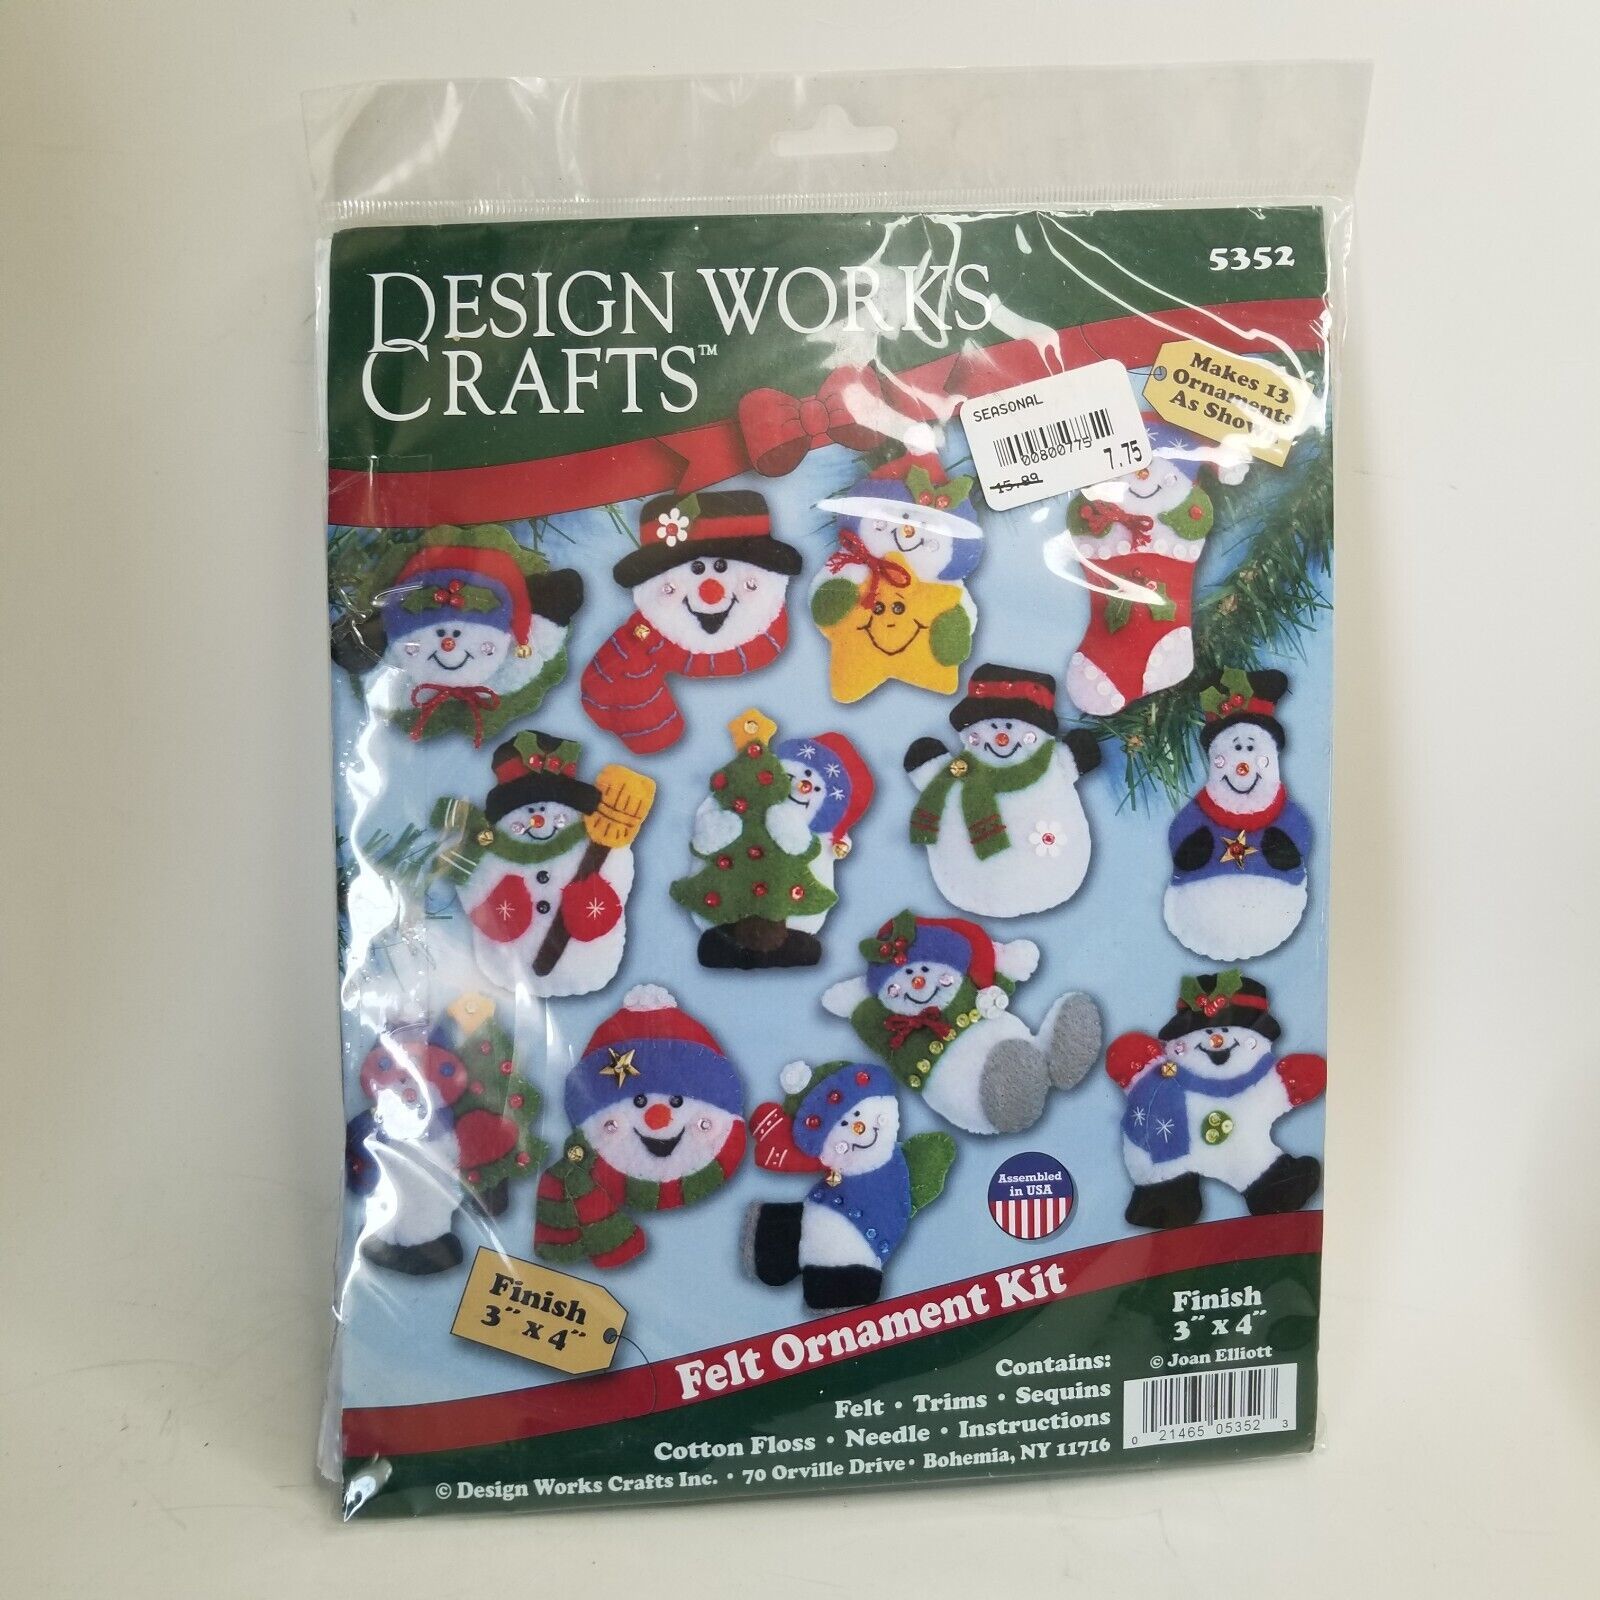 Design Works Crafts Felt Ornament Kit Sequins Makes 13 Snowmen Joan Elliot 5352 - $9.94